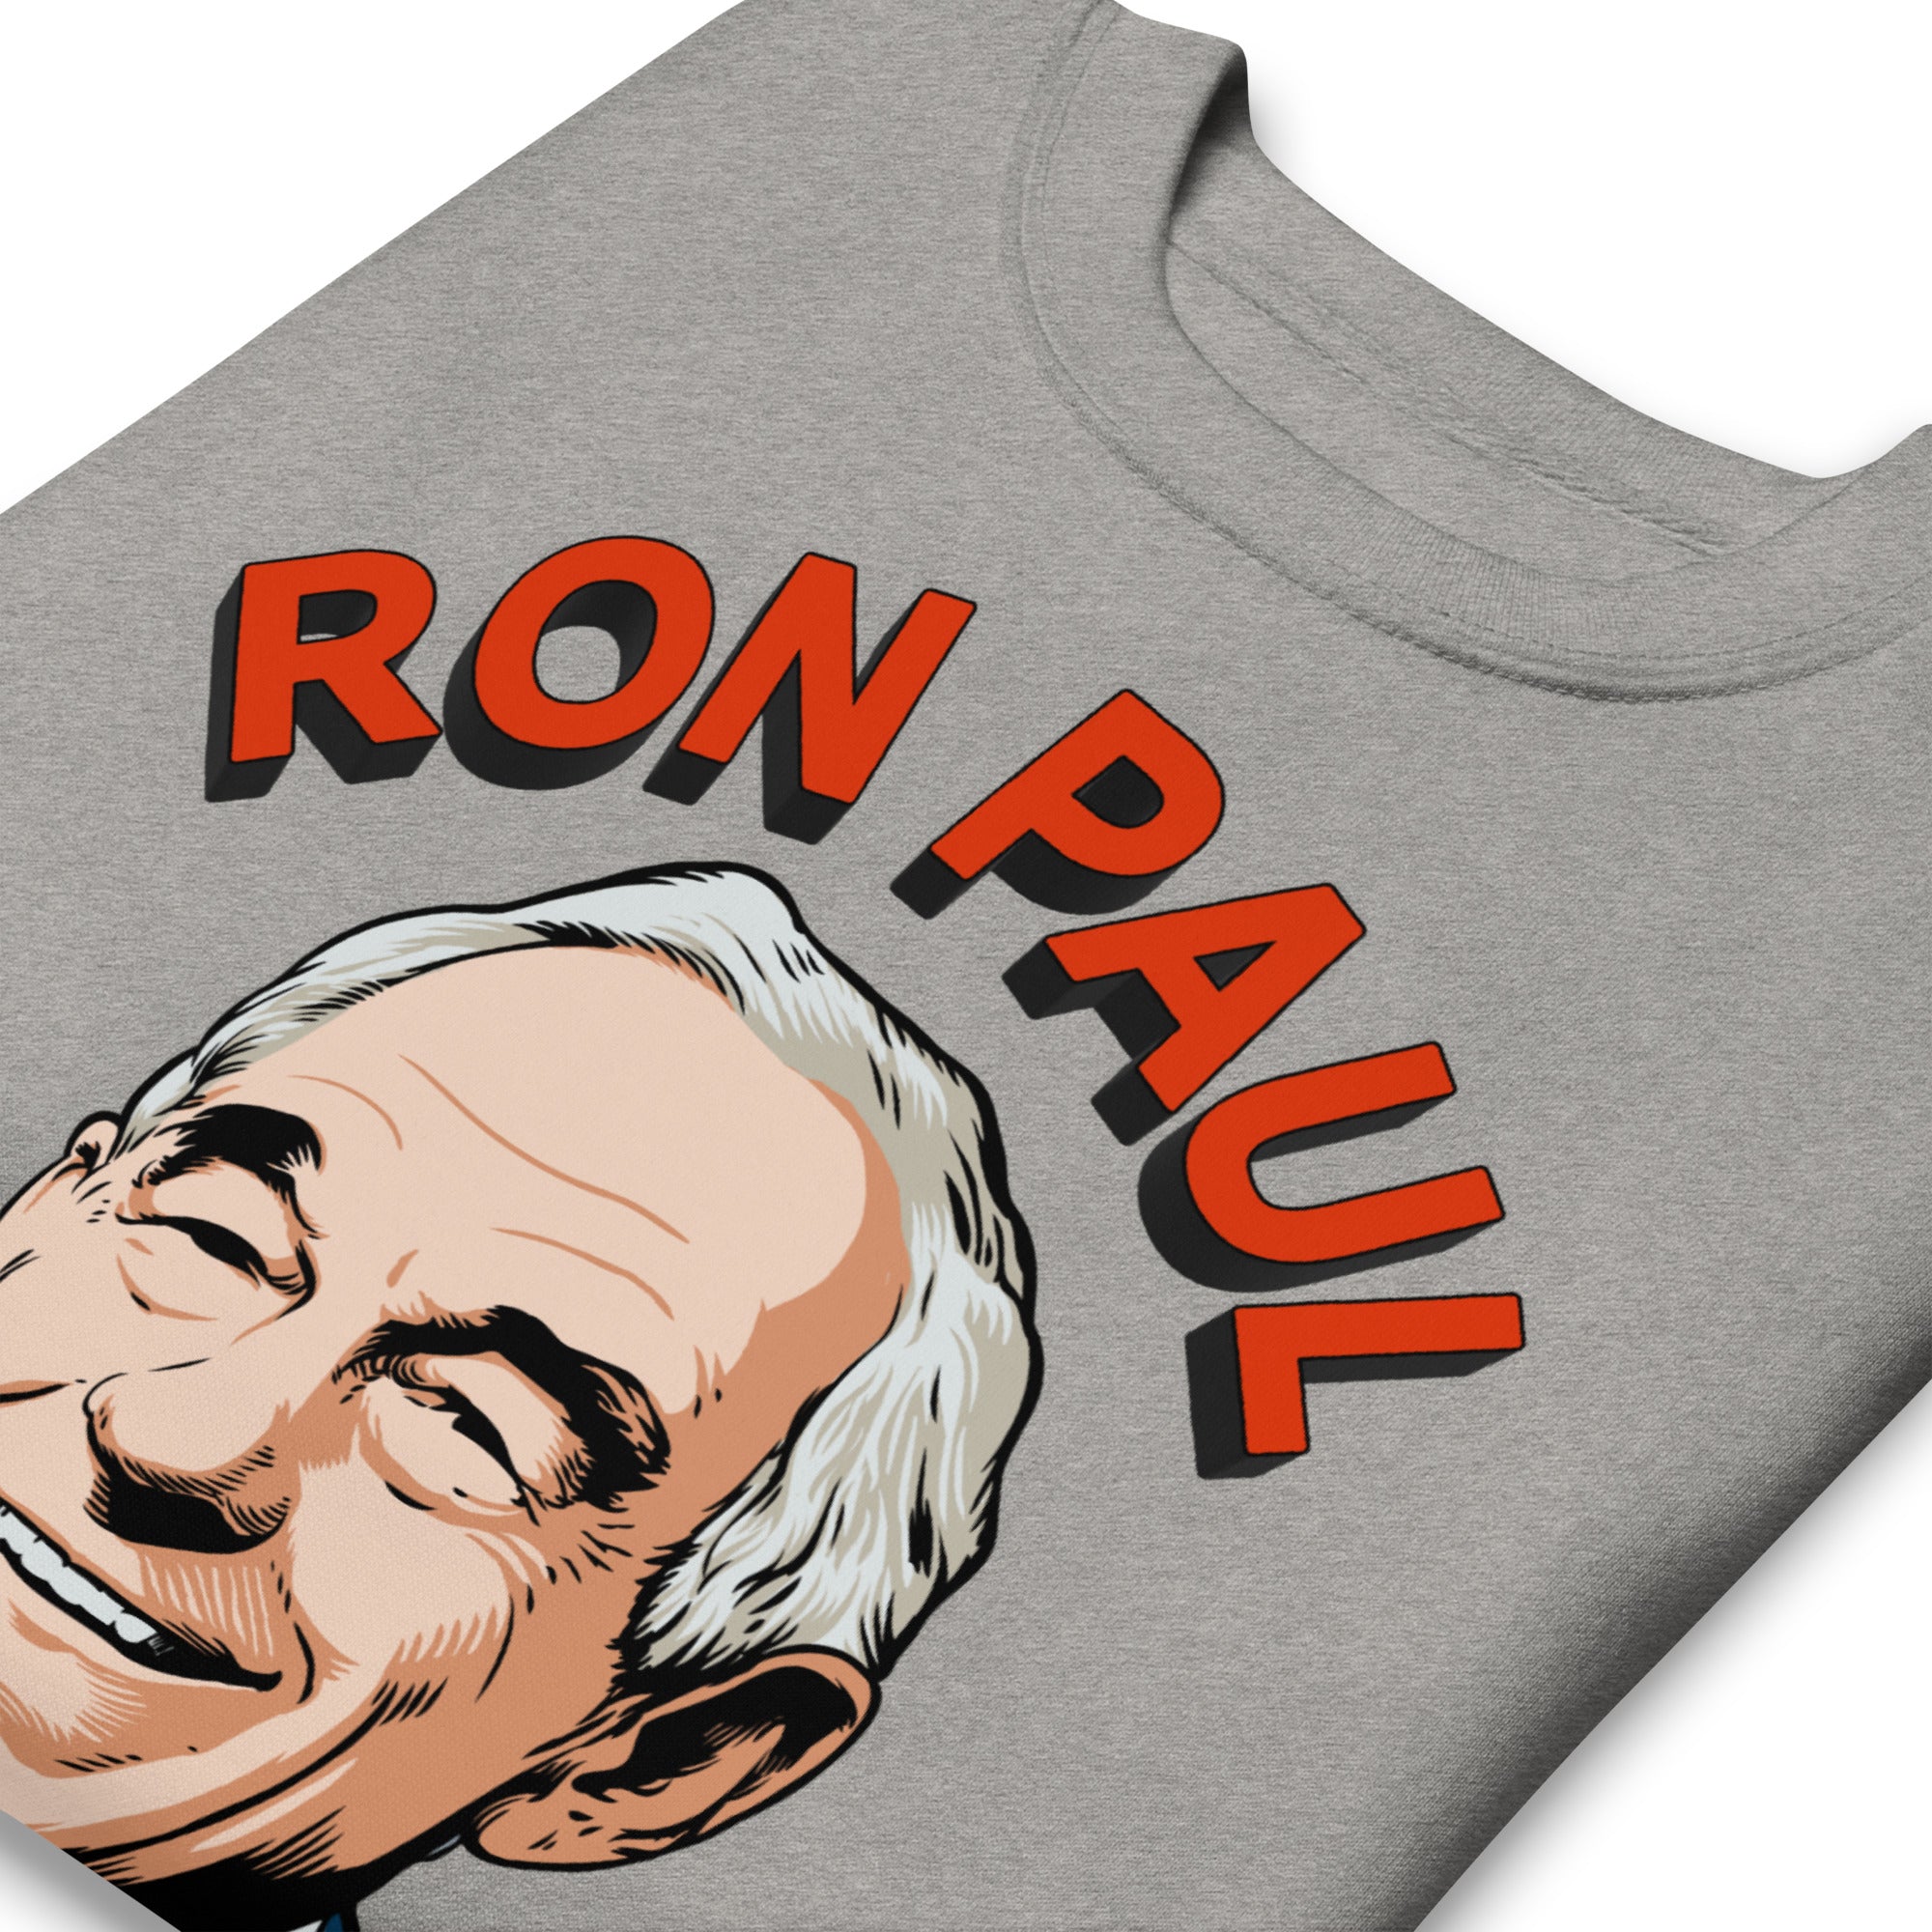 Ron Paul Fan Club Crewneck Sweatshirt